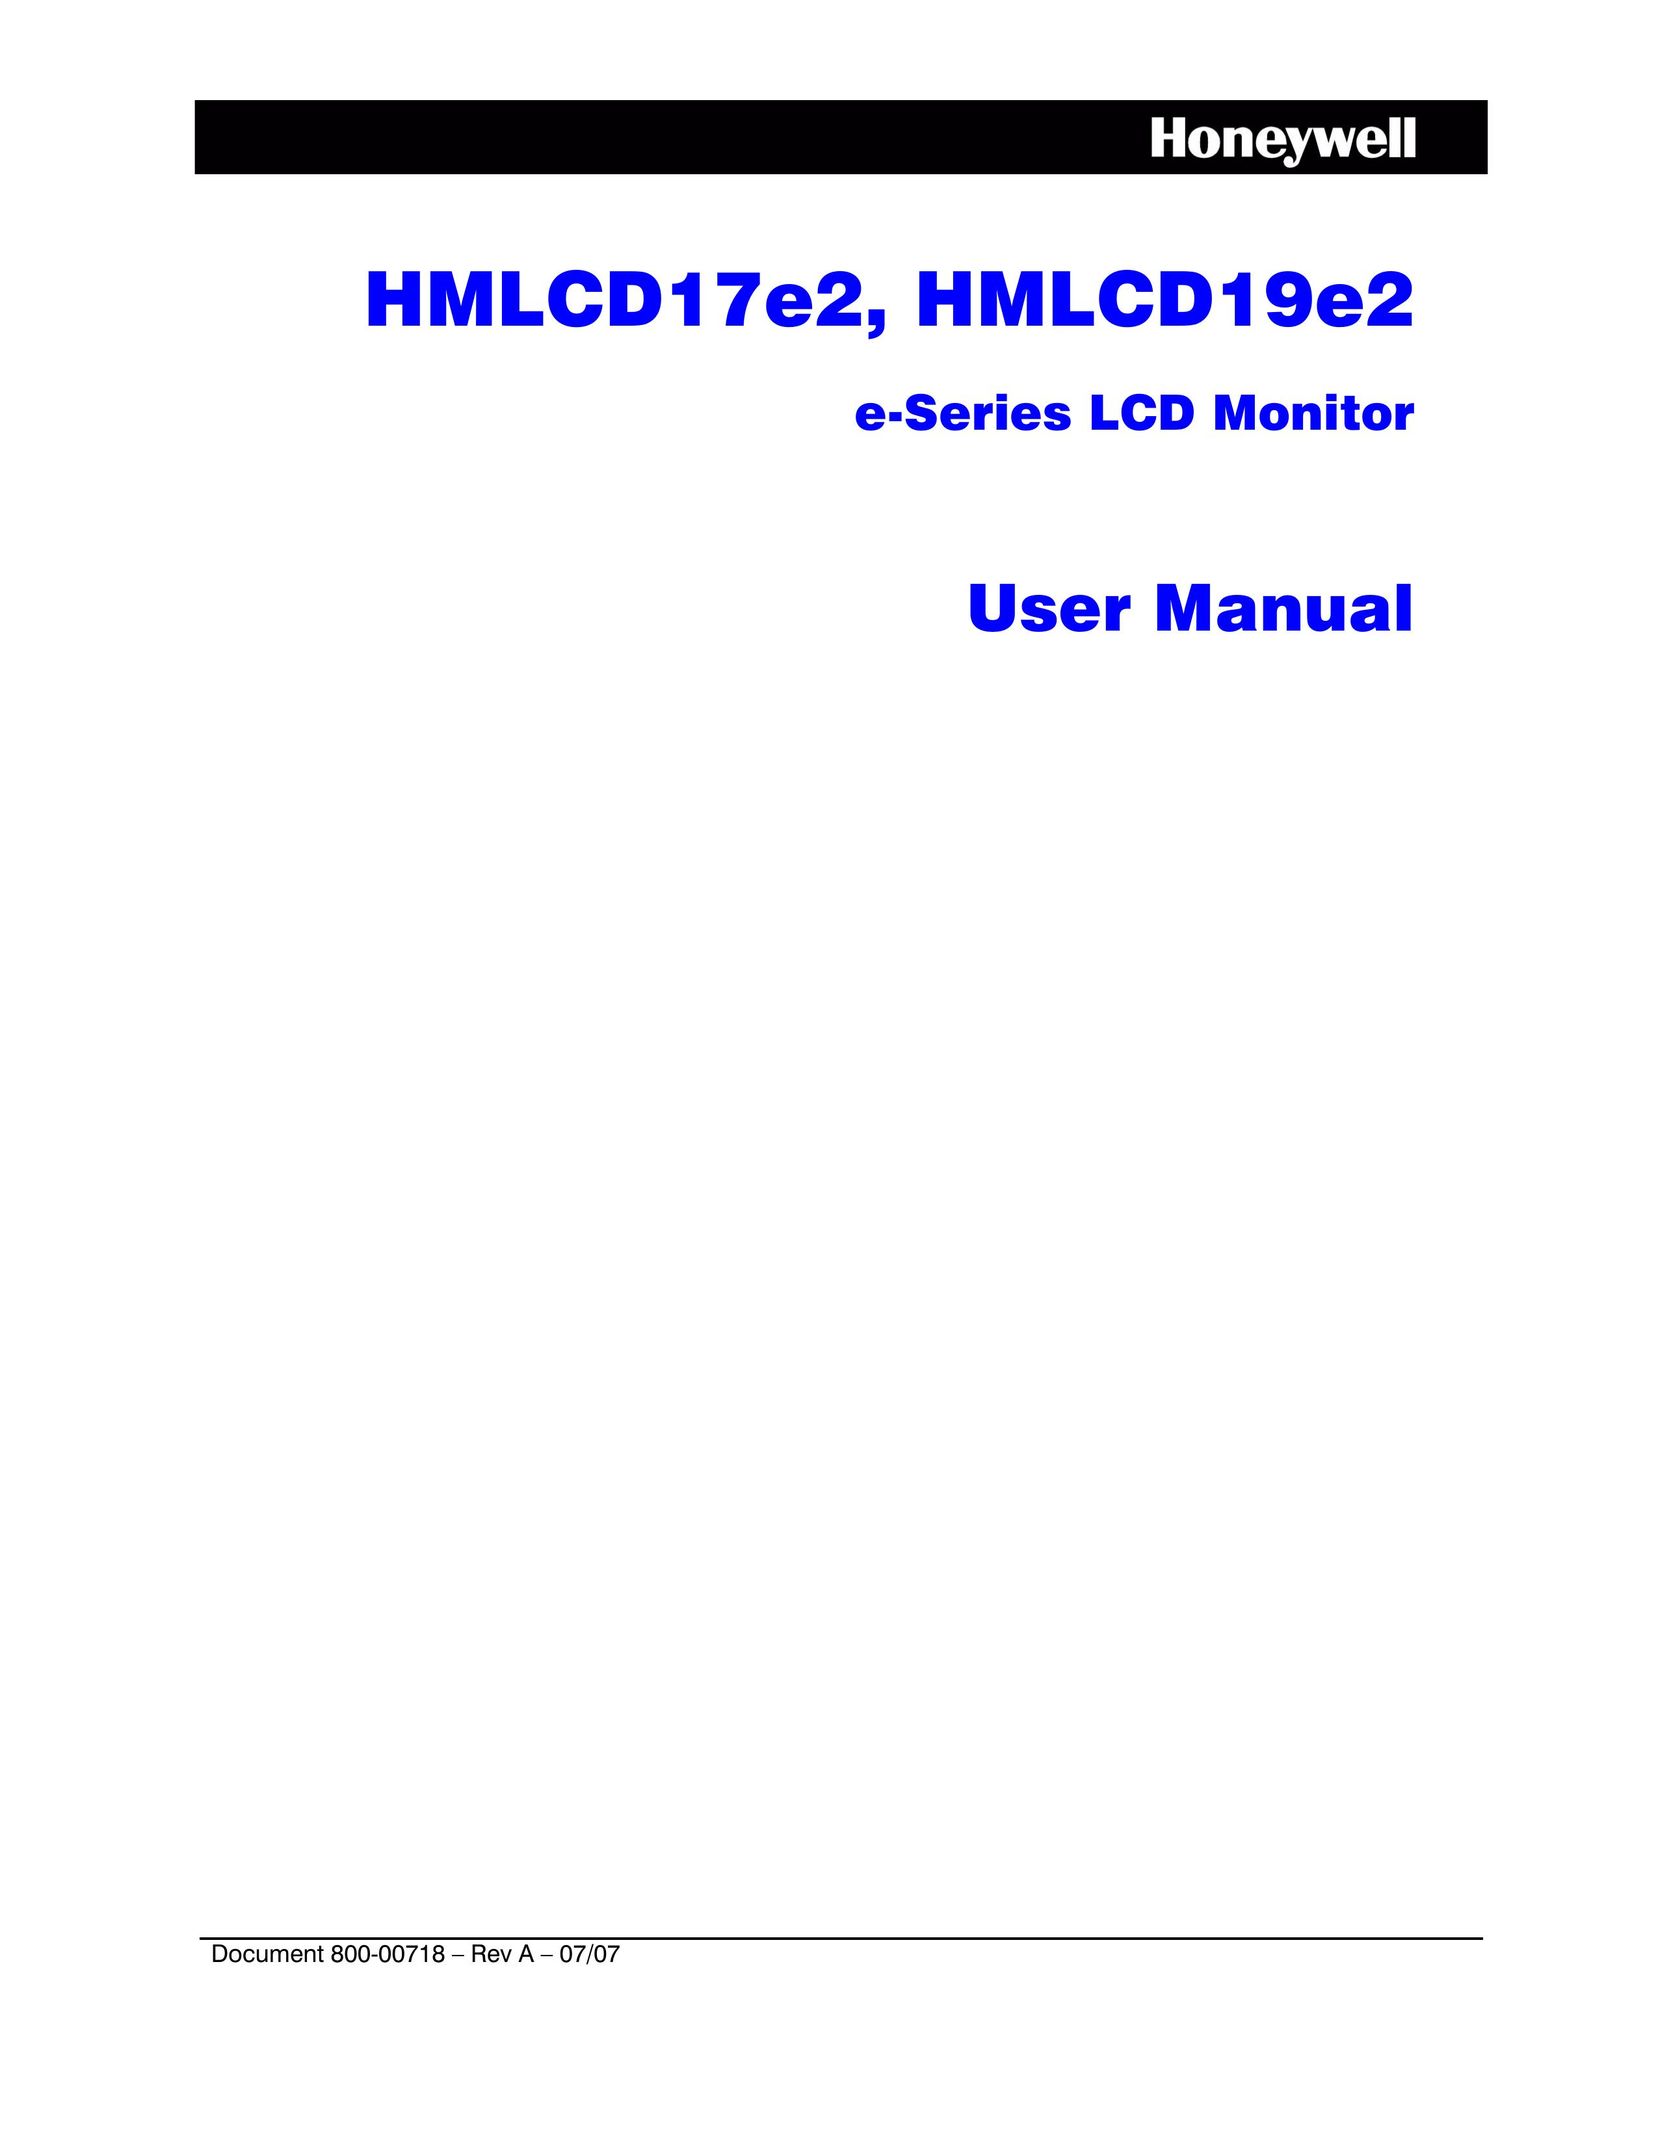 Honeywell HMLCD19e2 Computer Monitor User Manual